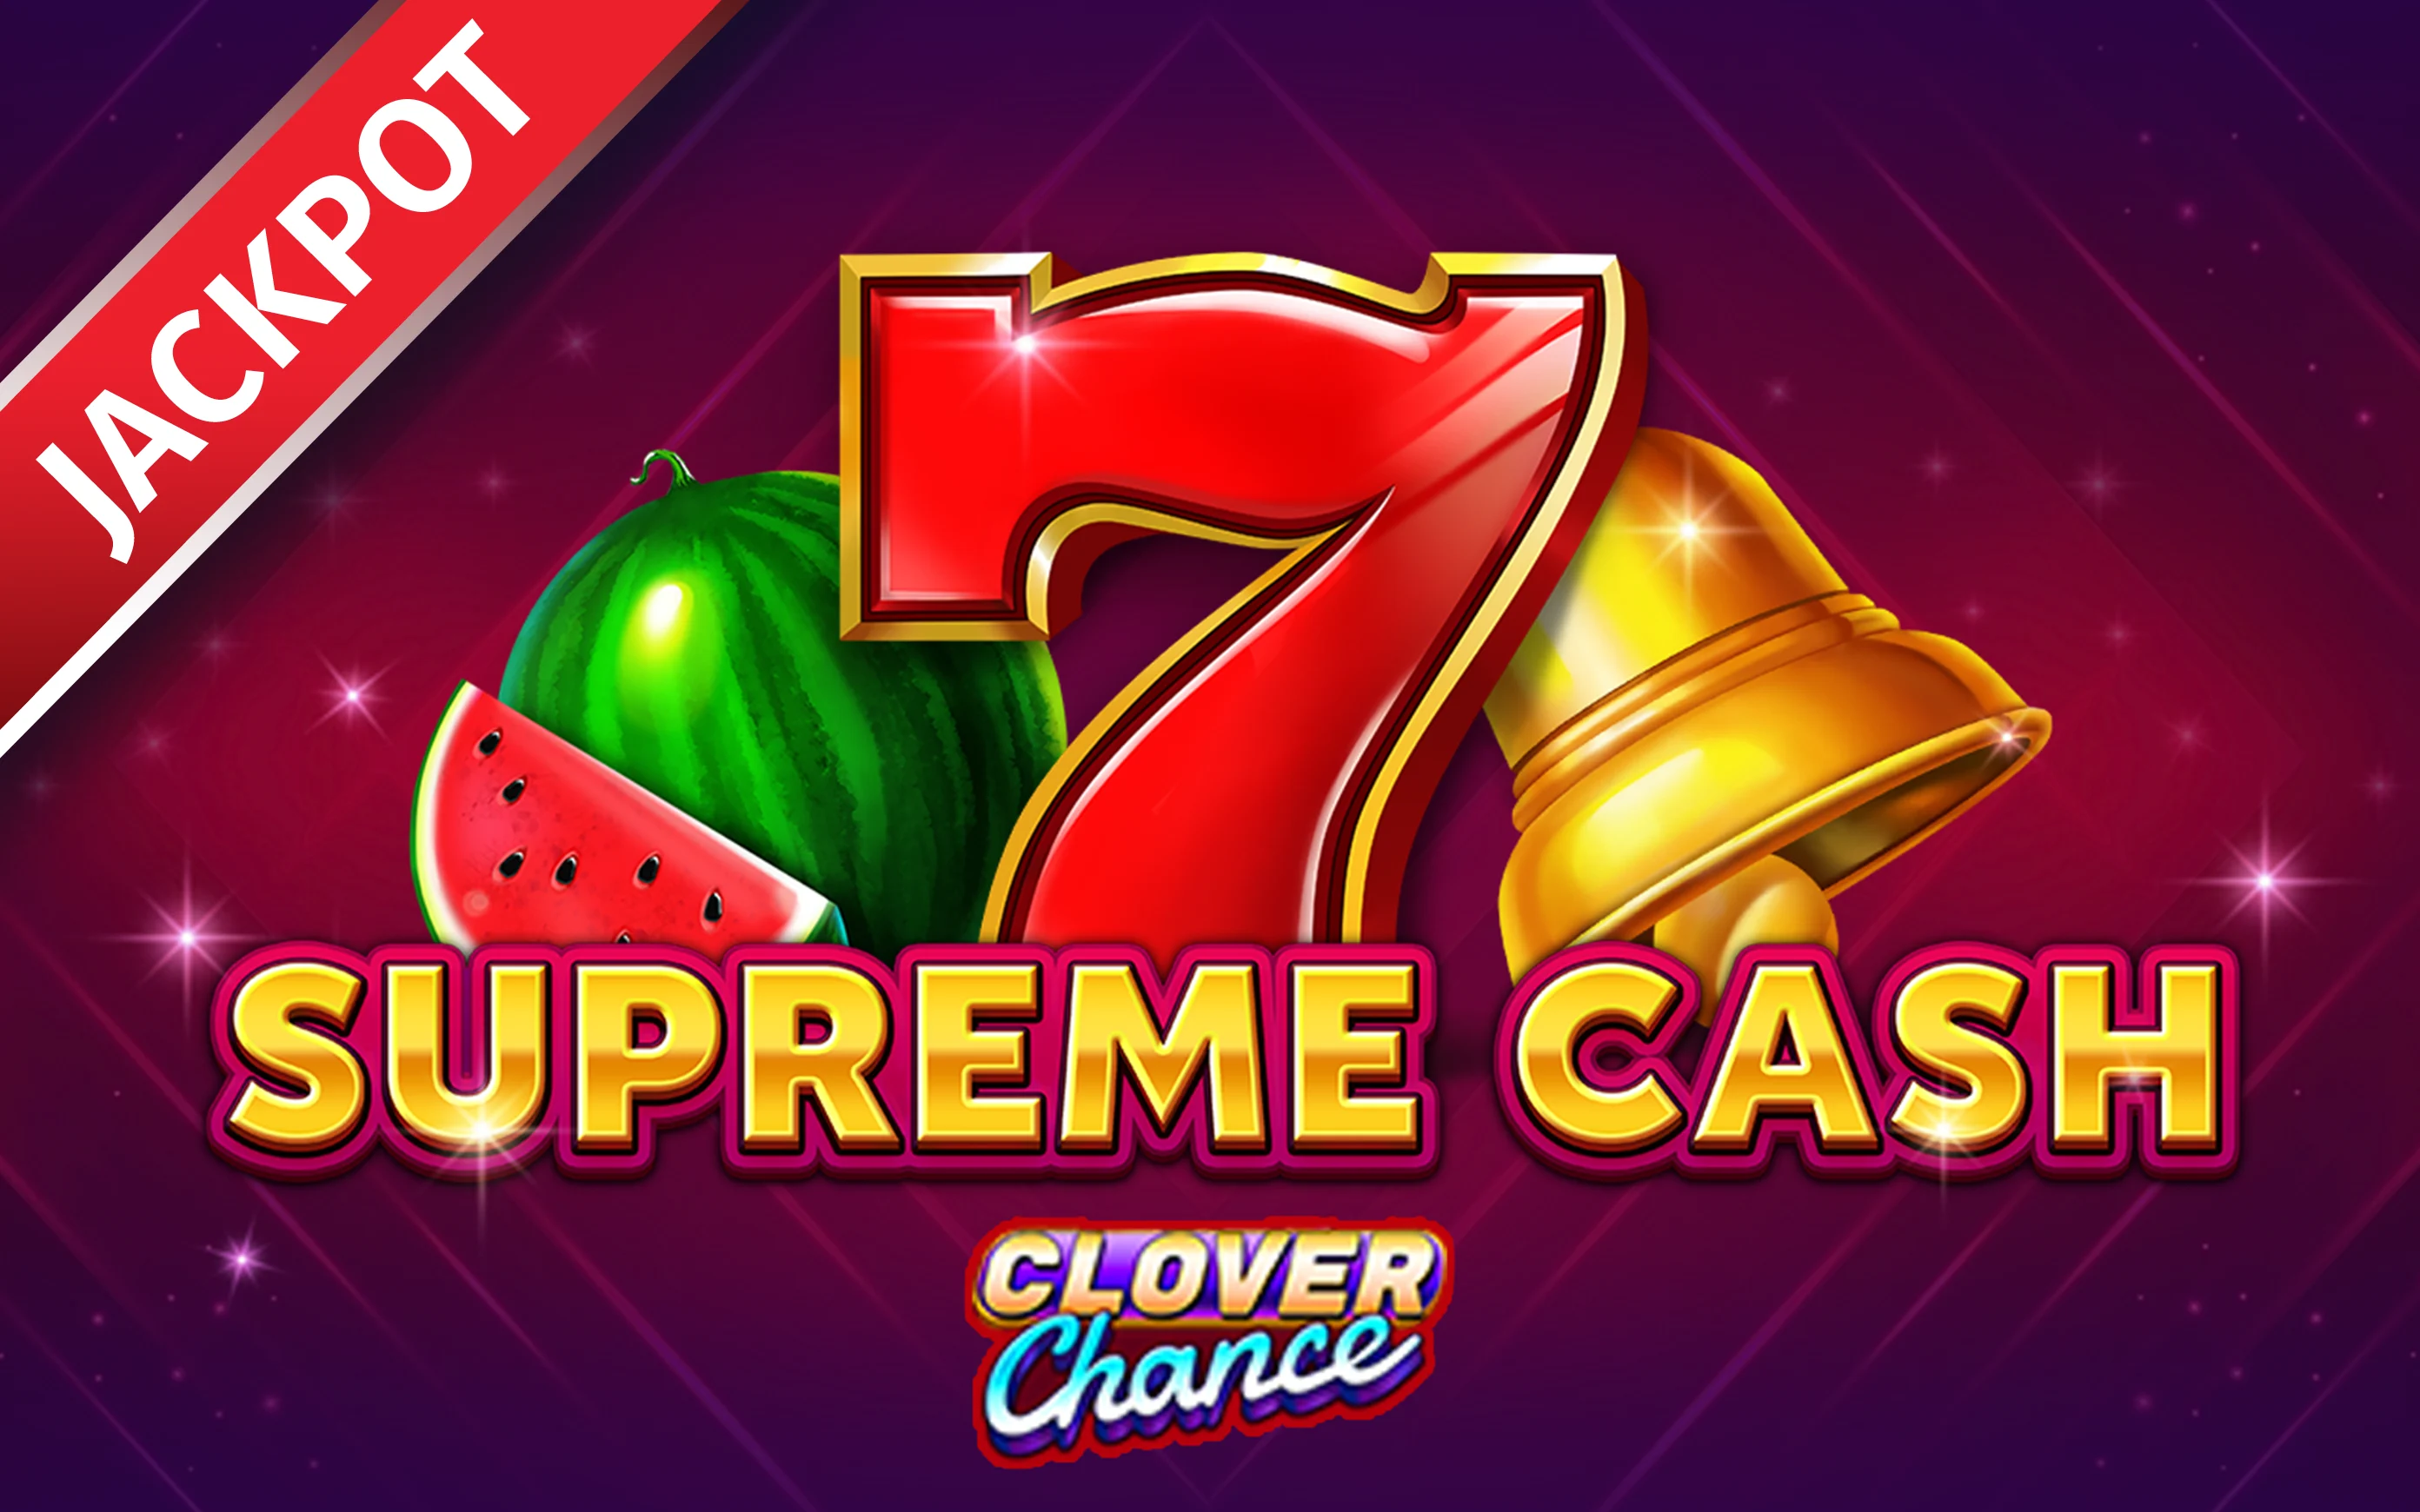 Play Supreme Cash on Starcasino.be online casino